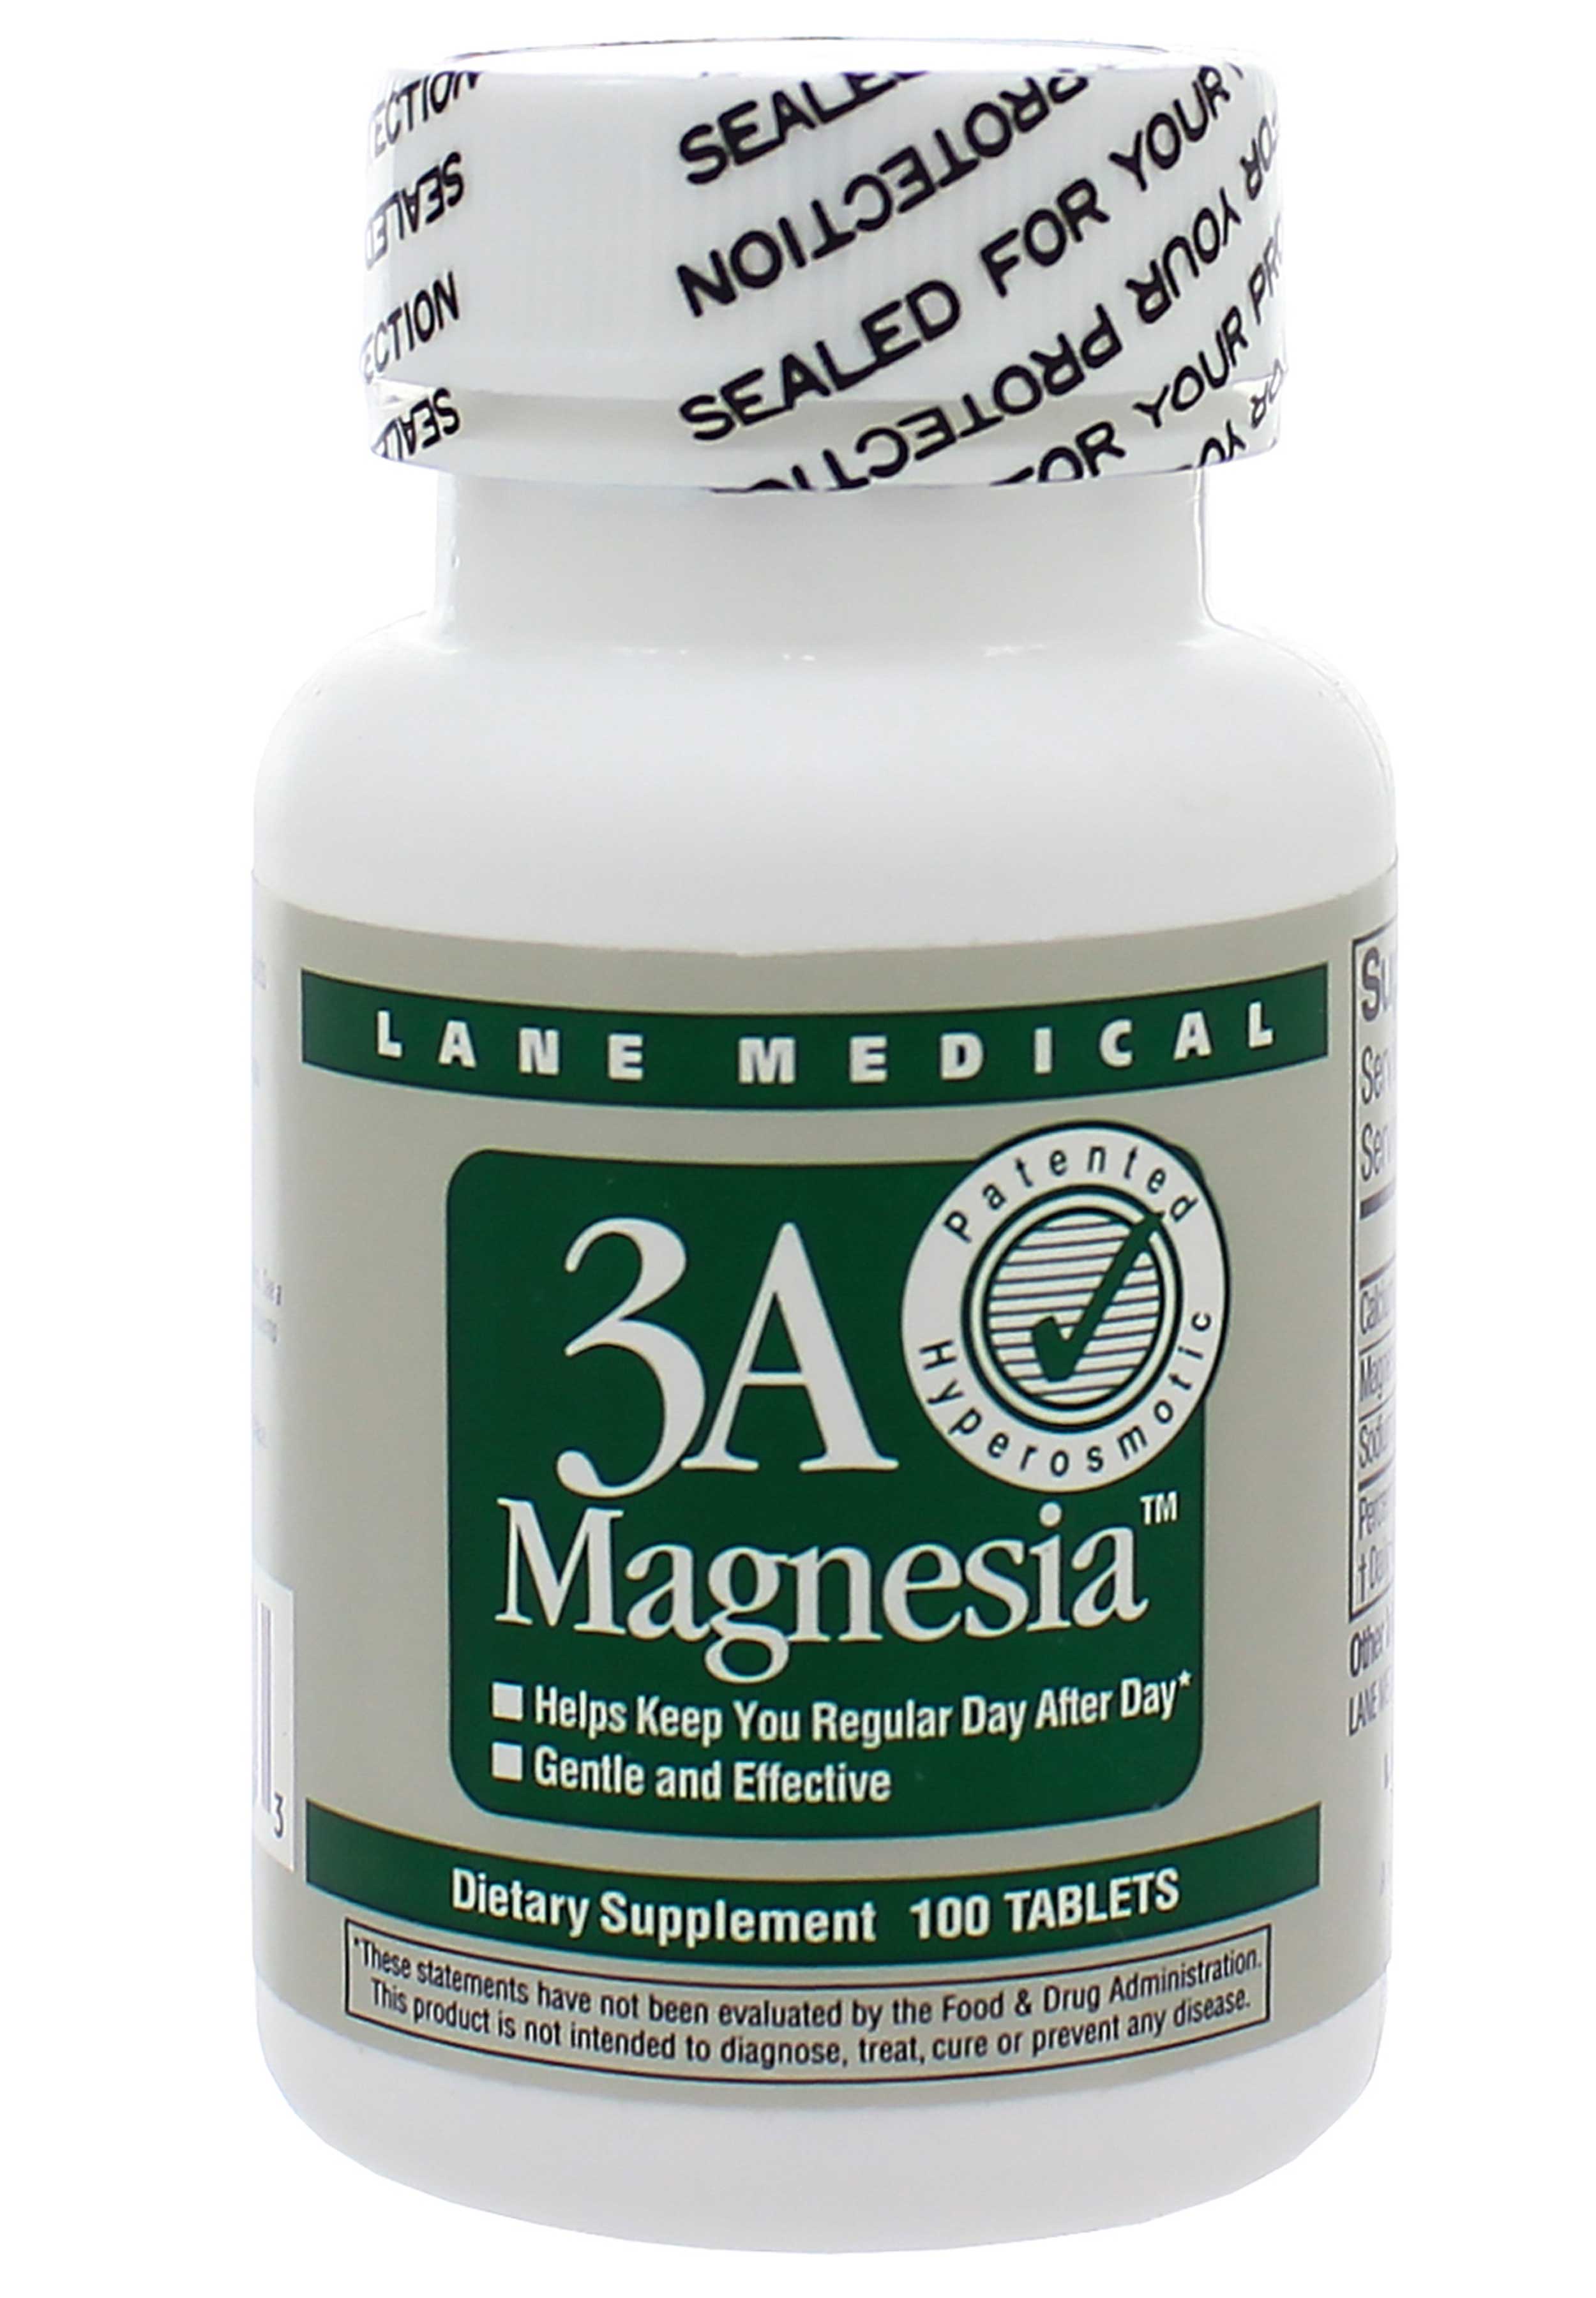 Lane Medical 3A Magnesia